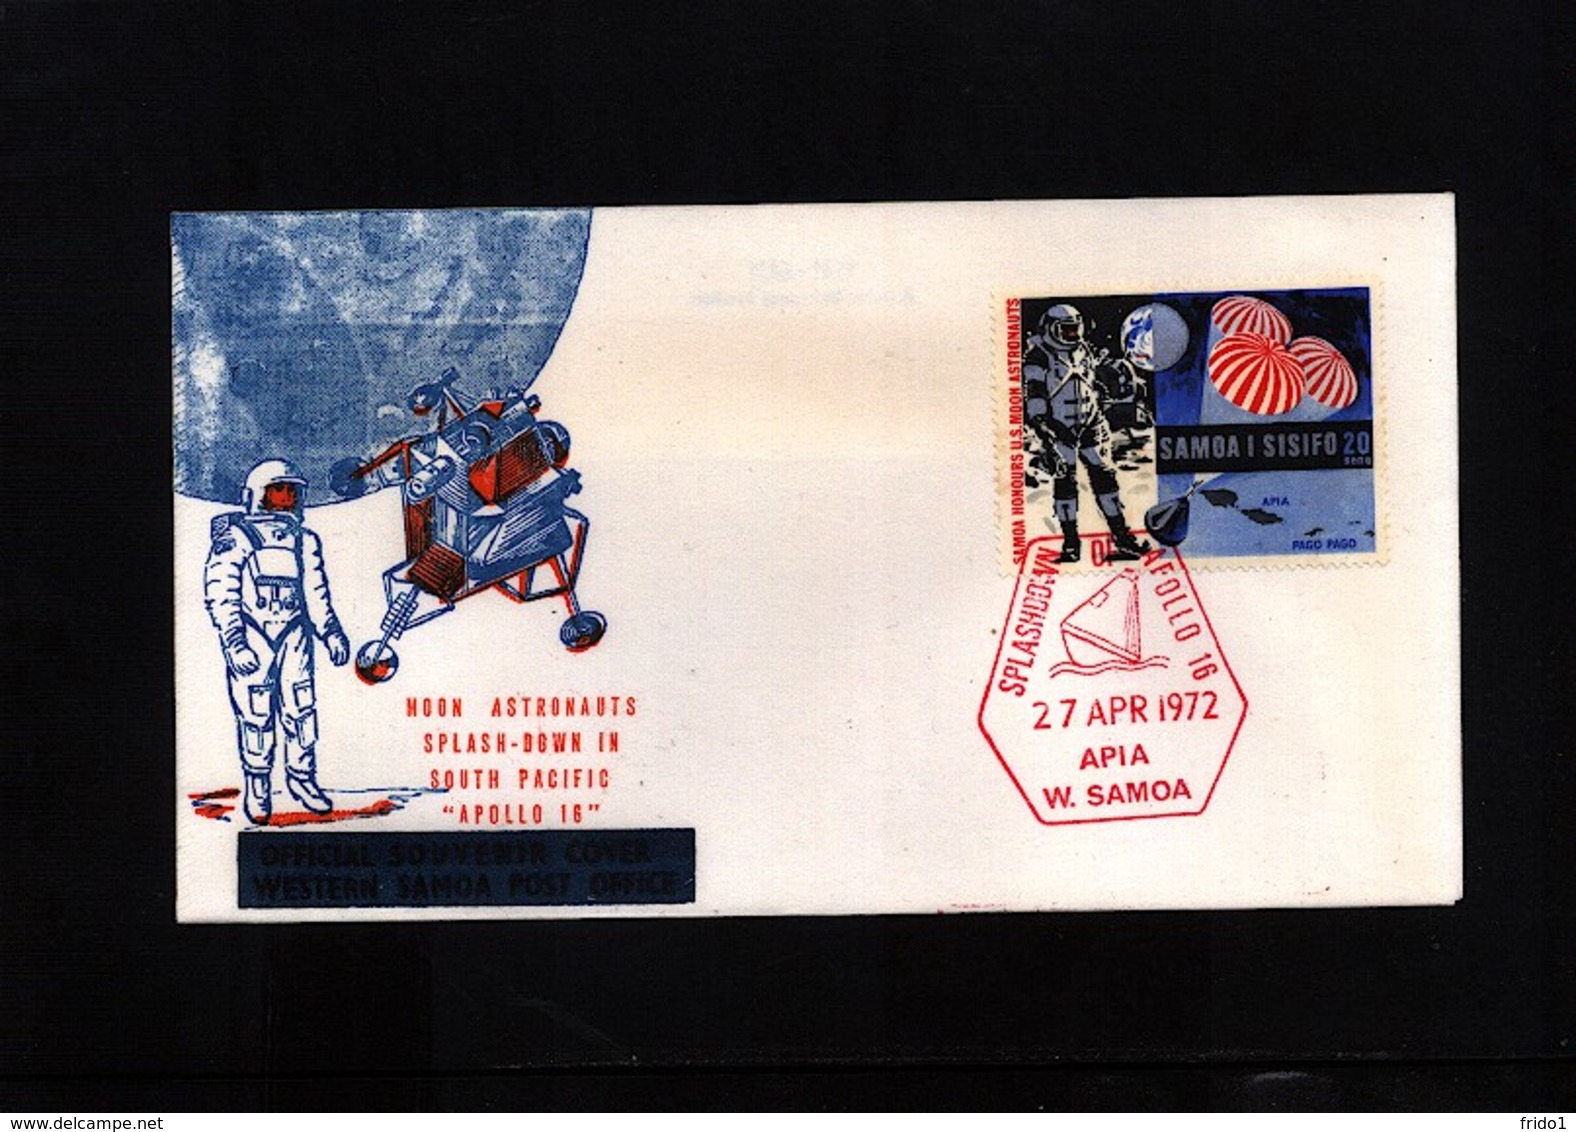 Samoa And Sisifo 1971 Moon Astronauts Interesting Cover - Océanie